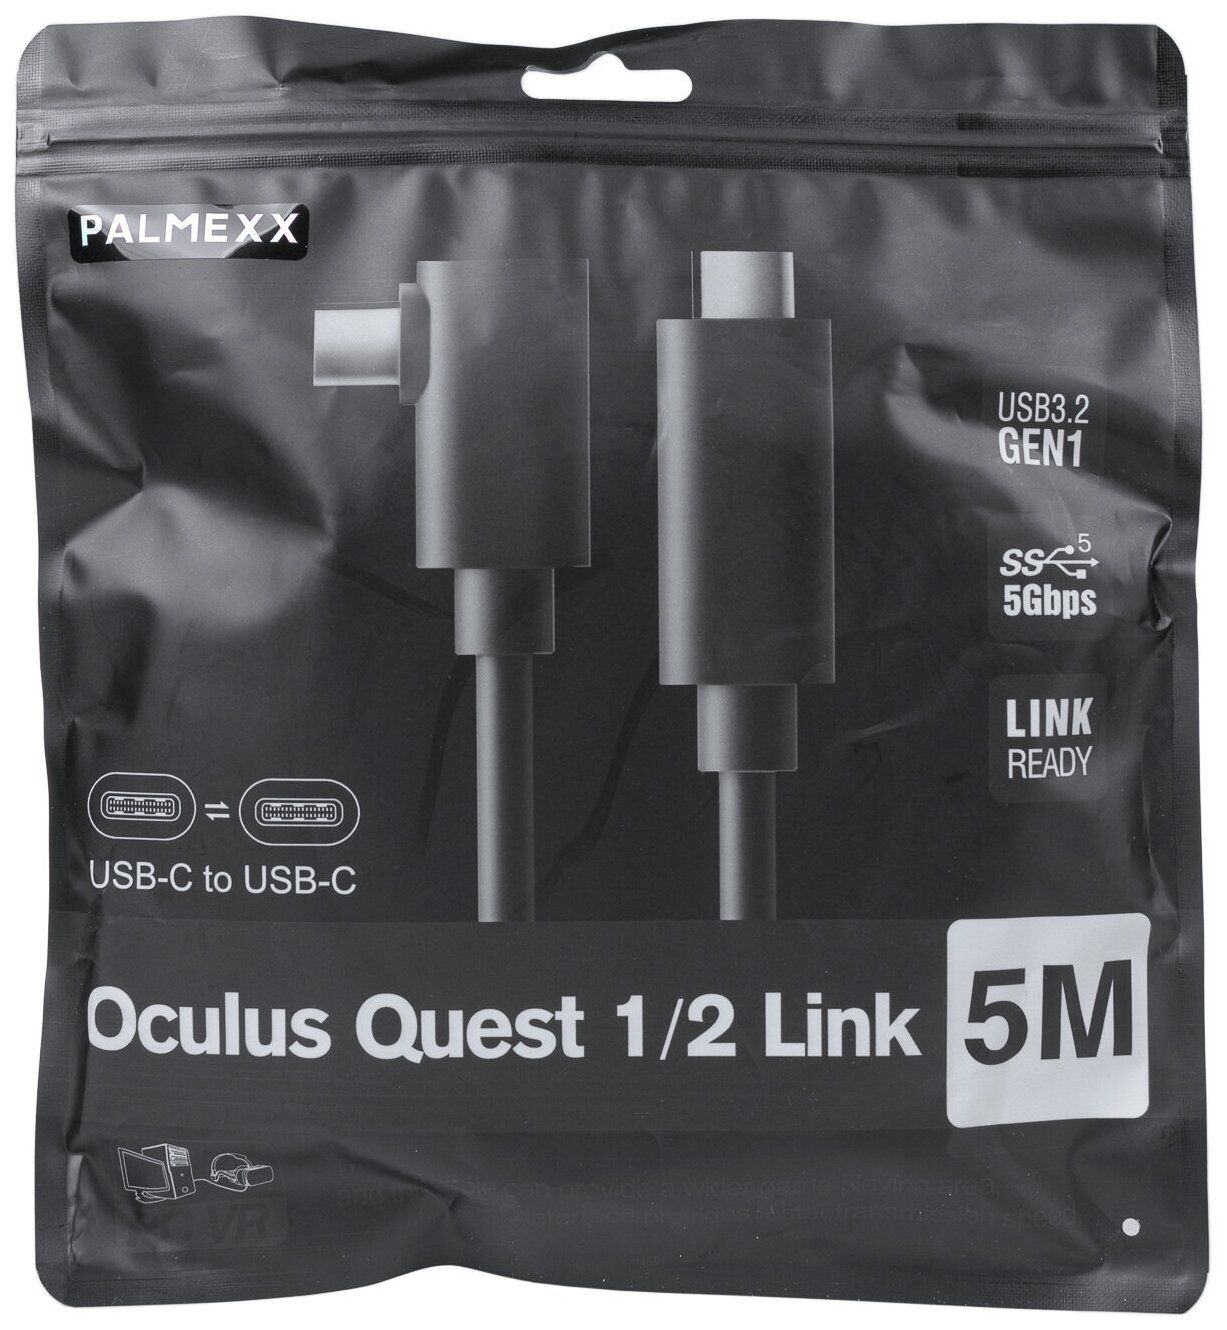 Кабель Palmexx USB-C to USB-C Oculus Quest 1/2 Link PX/CBL-USBC-OCULUS-5M кабель palmexx usb c to usb c для oculus quest 1 2 link usb3 2gen1 5gbps 5m